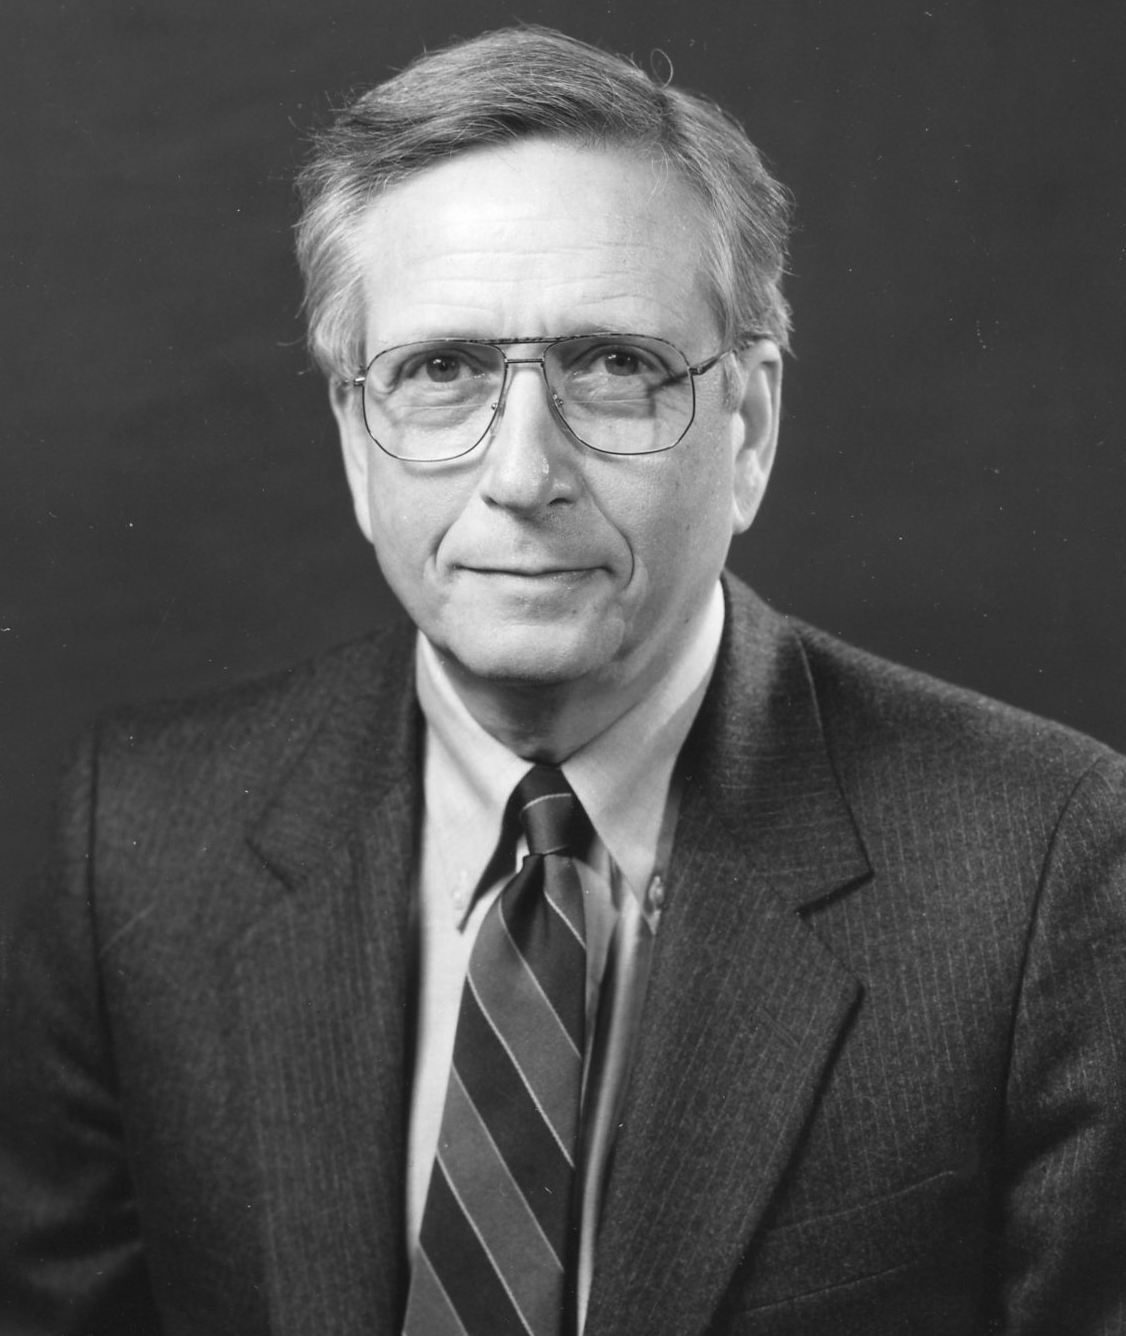 Dr. Robert Ackerman